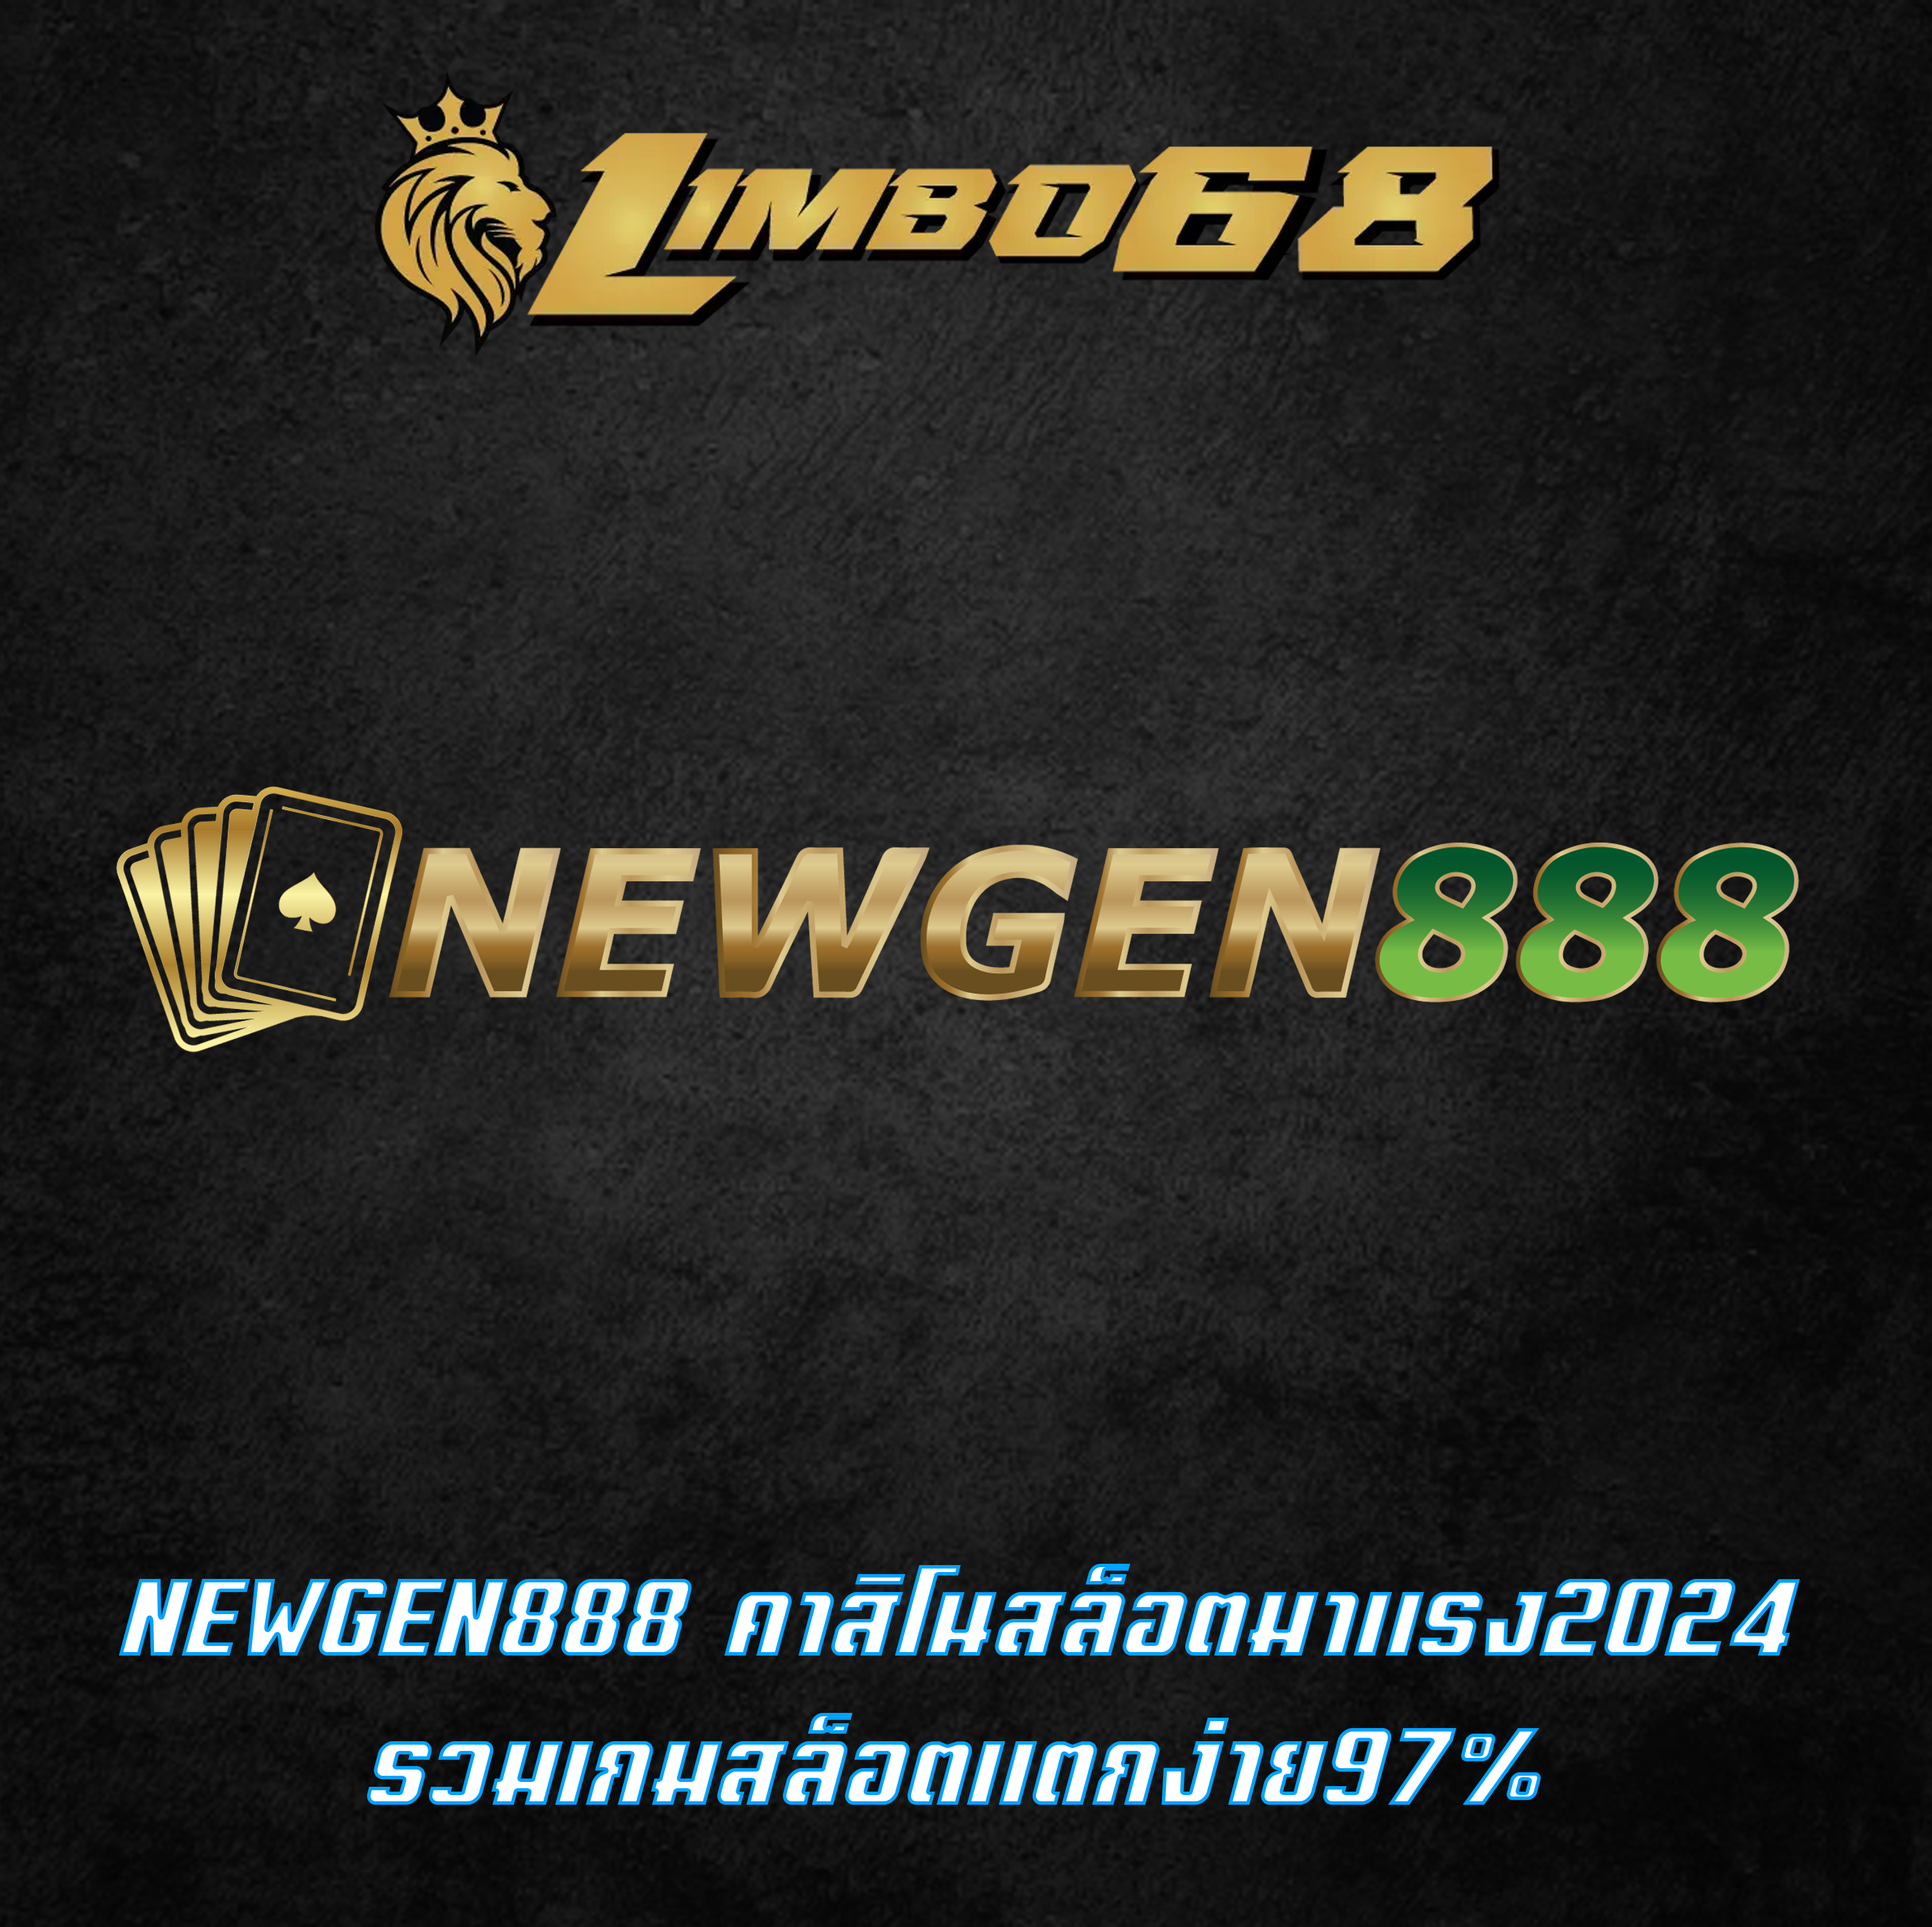 NEWGEN888